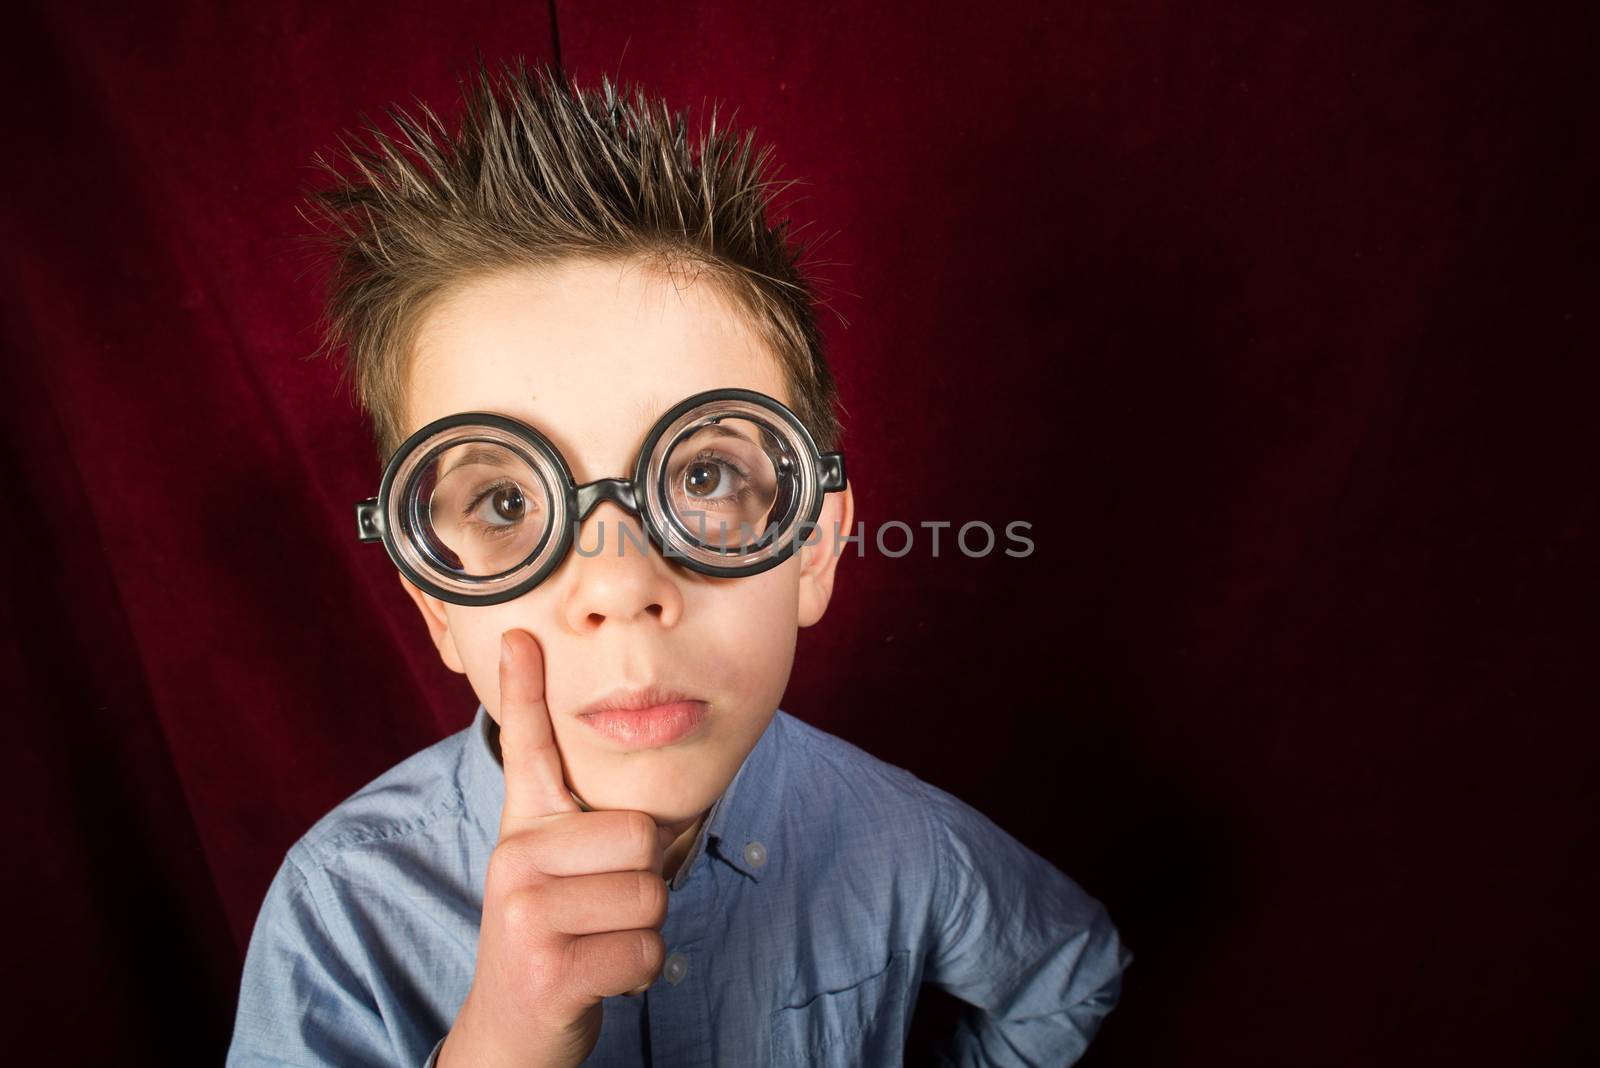 Child with big glasses by deyan_georgiev